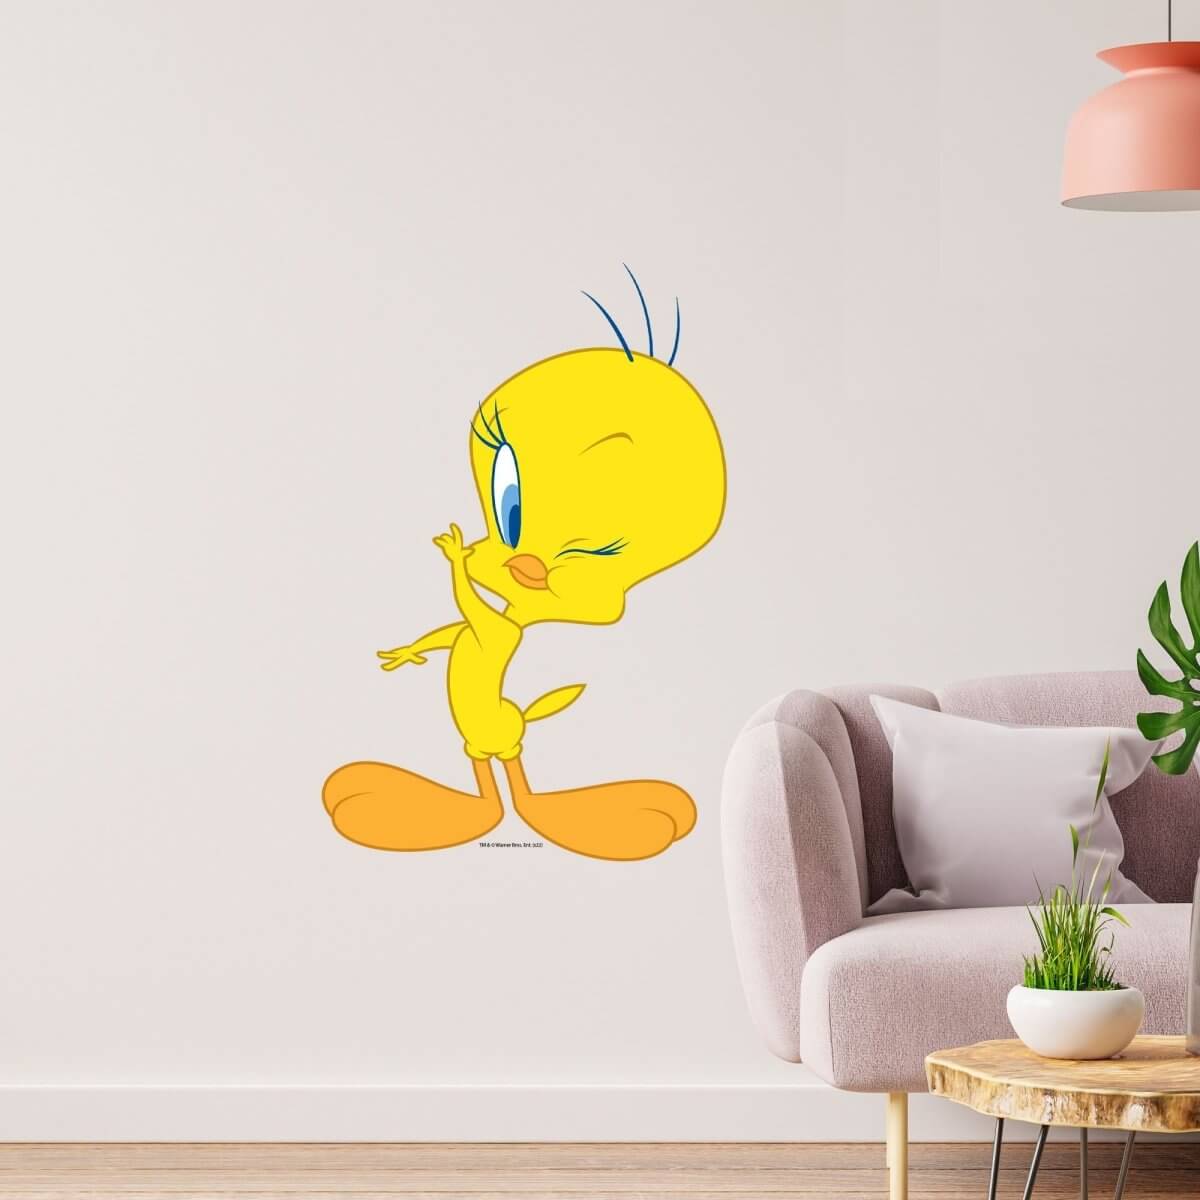 Kismet Decals Looney Tunes Tweety Bird Devious Licensed Wall Sticker - Easy DIY Home & Kids Room Decor Wall Decal Art - Kismet Decals